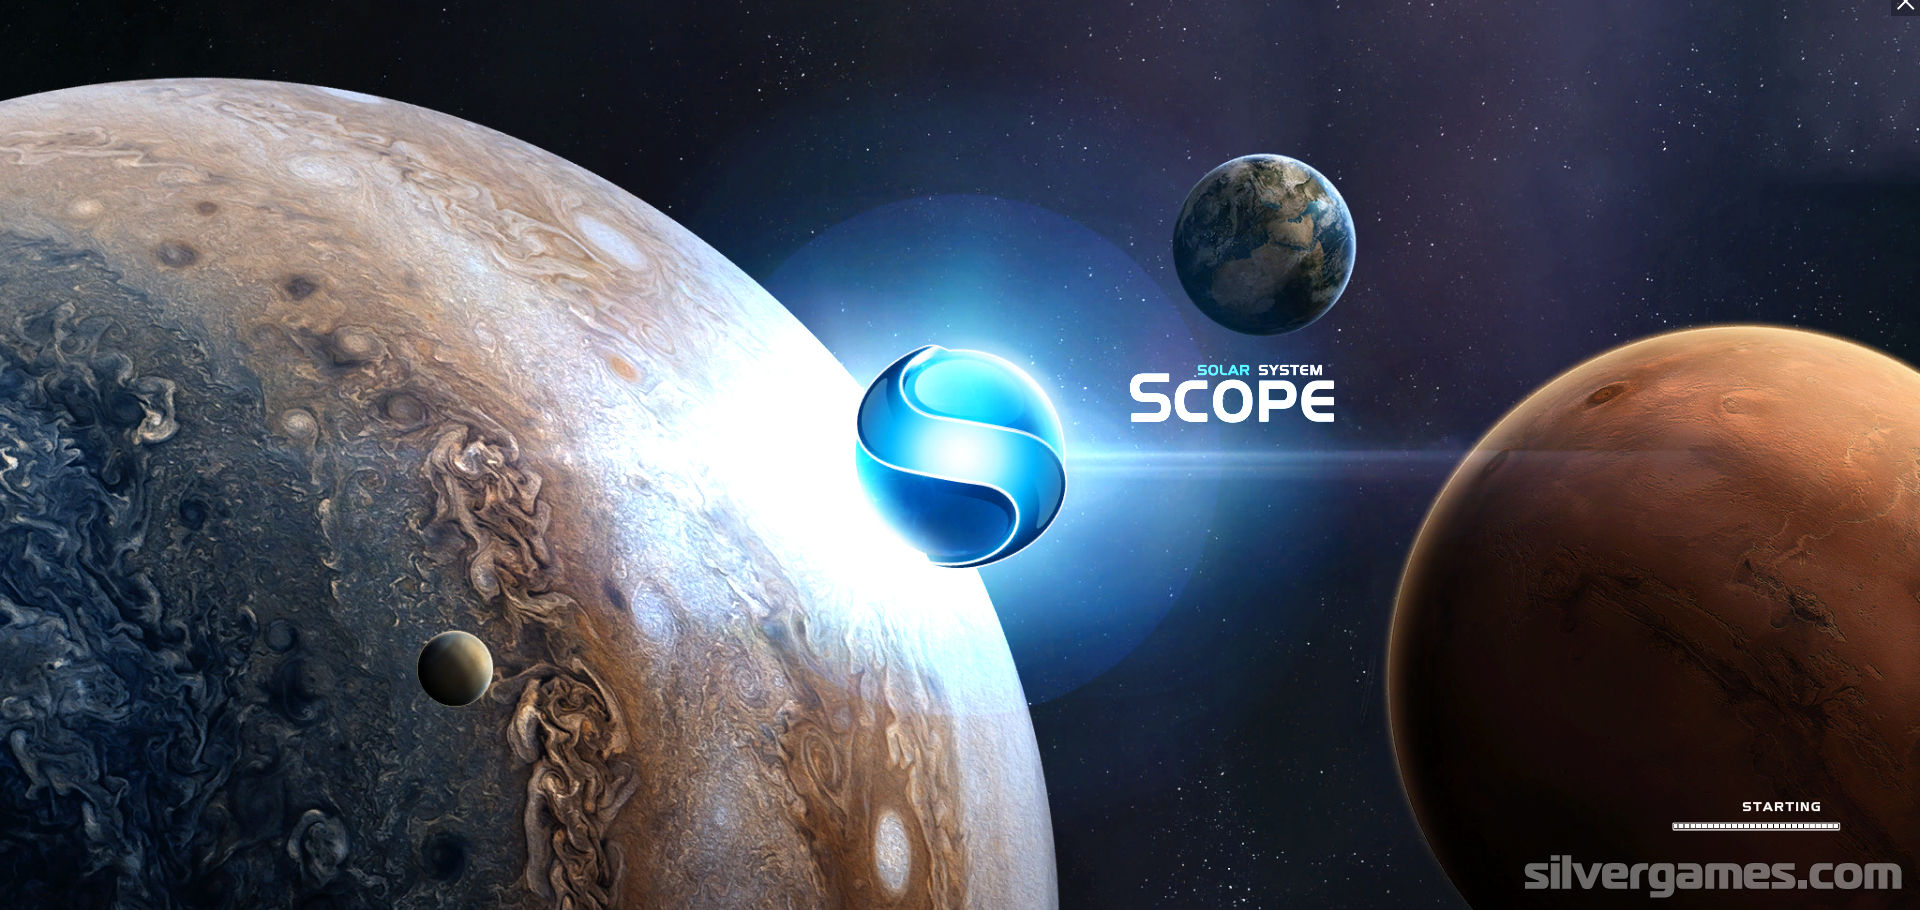 System scope. Solar System scope телескоп. Логотип Solar System scope. Солнечная система НАСА. Solar System scope VR Uptage.